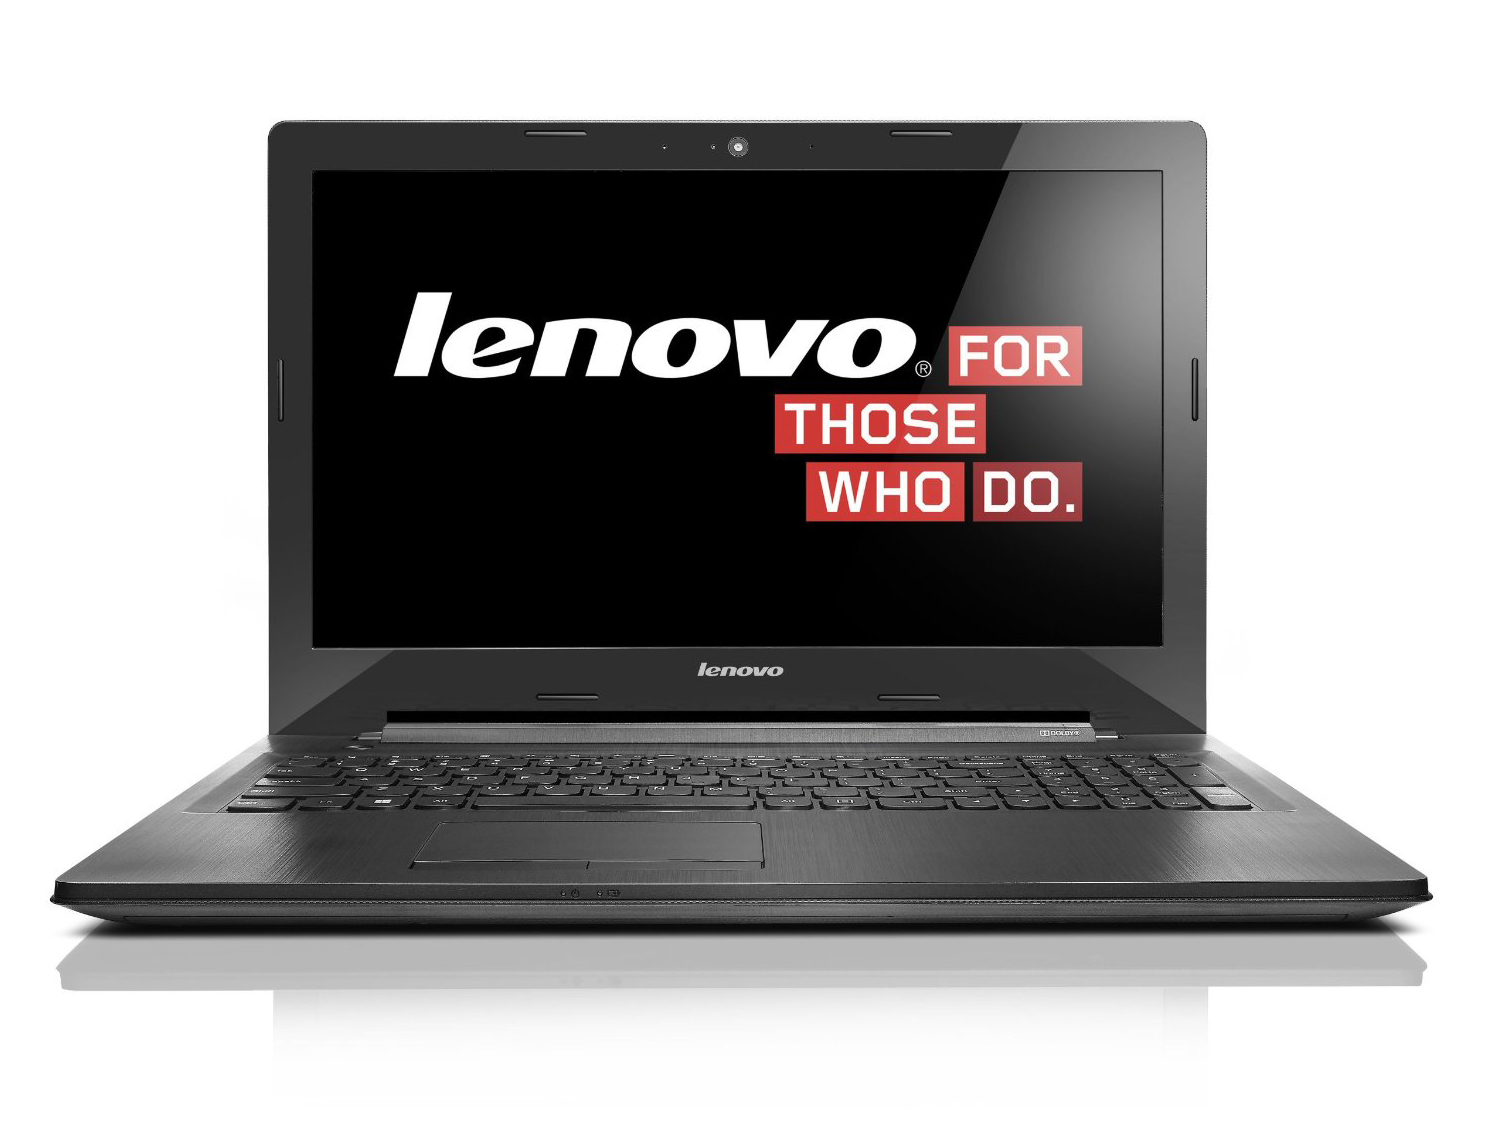 Lenovo G50-30 Notebook Review Update - NotebookCheck.net ...